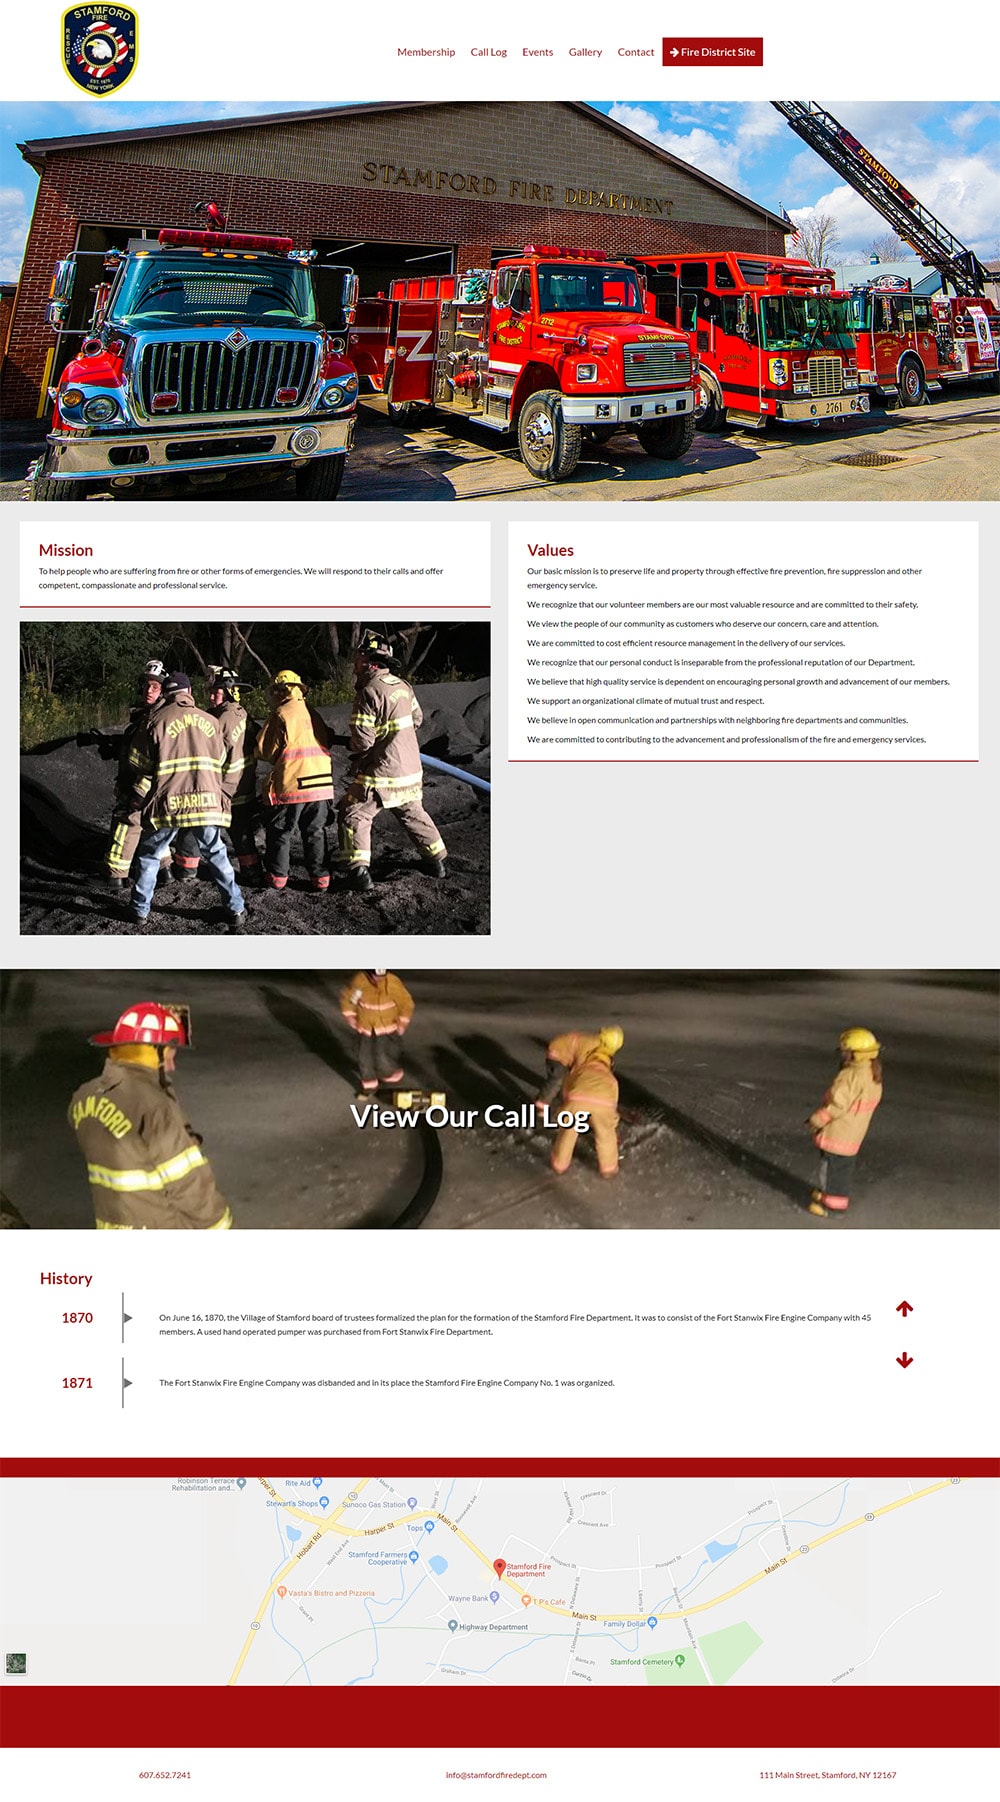 Stamford Fire Department Website